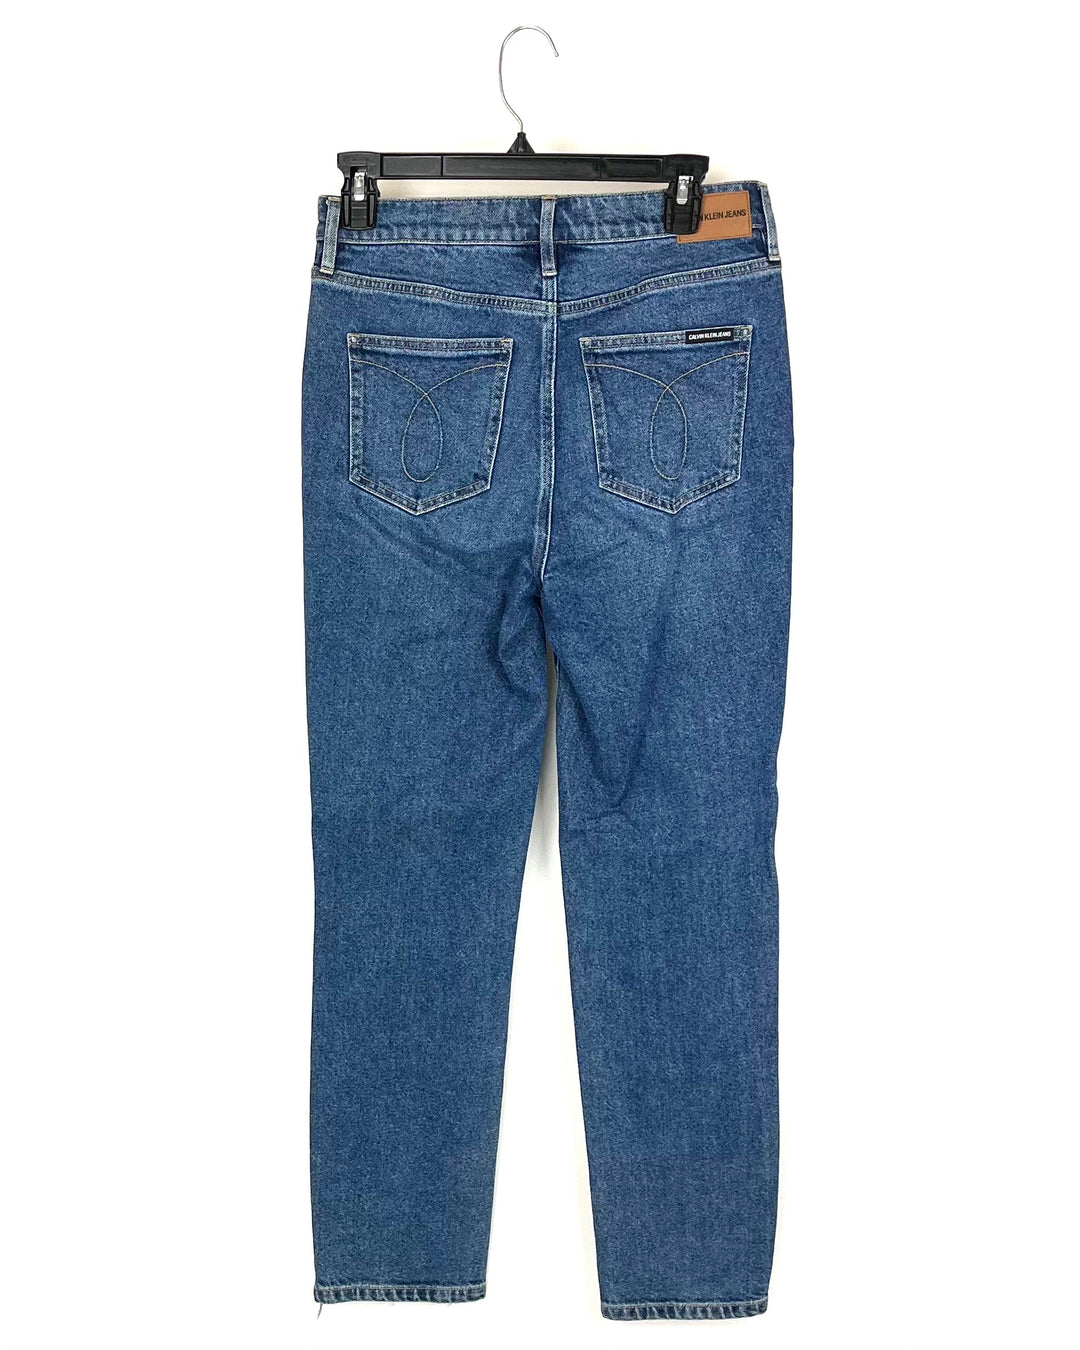 High Waisted Dark Denim Jeans - Size 28